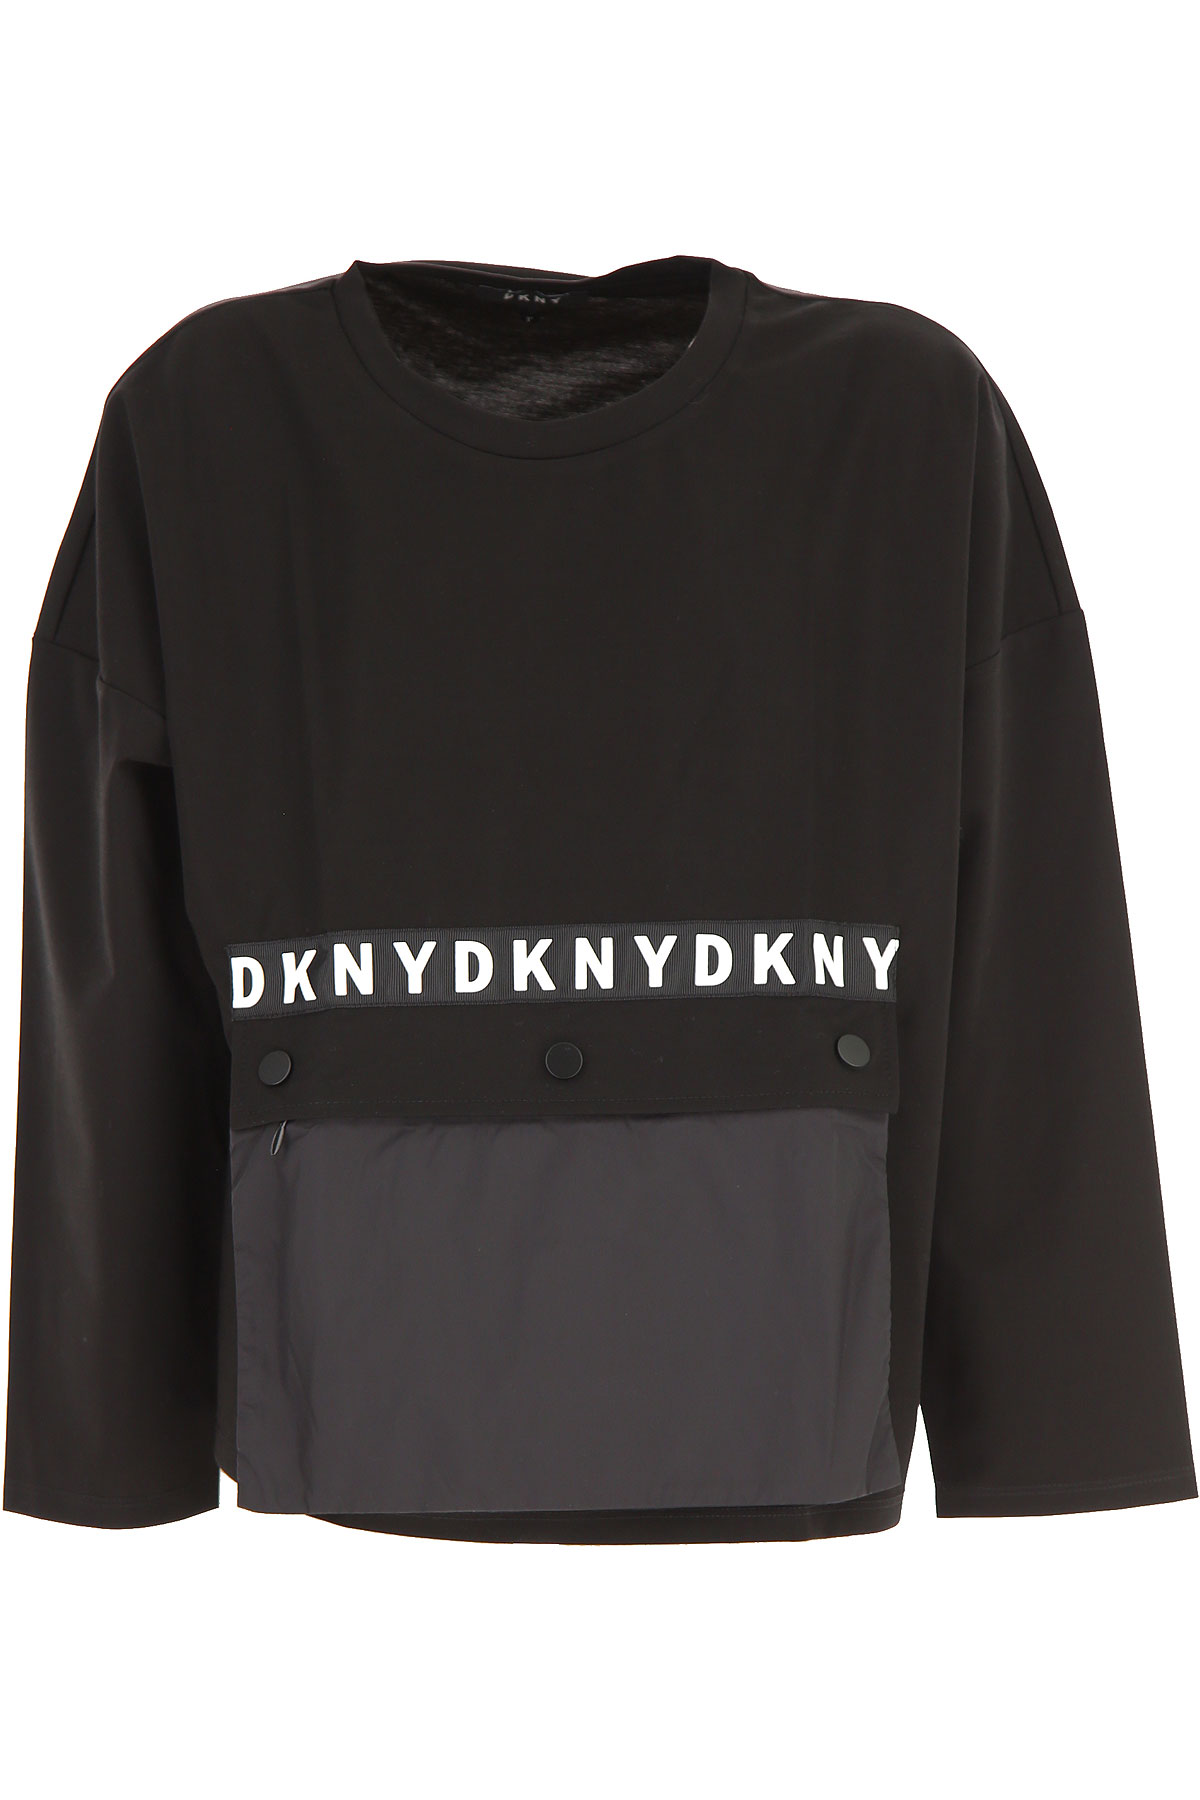 DKNY Kinder T-Shirt für Mädchen Günstig im Sale, Schwarz, Viskose, 2017, 10Y 12Y 16Y 8Y